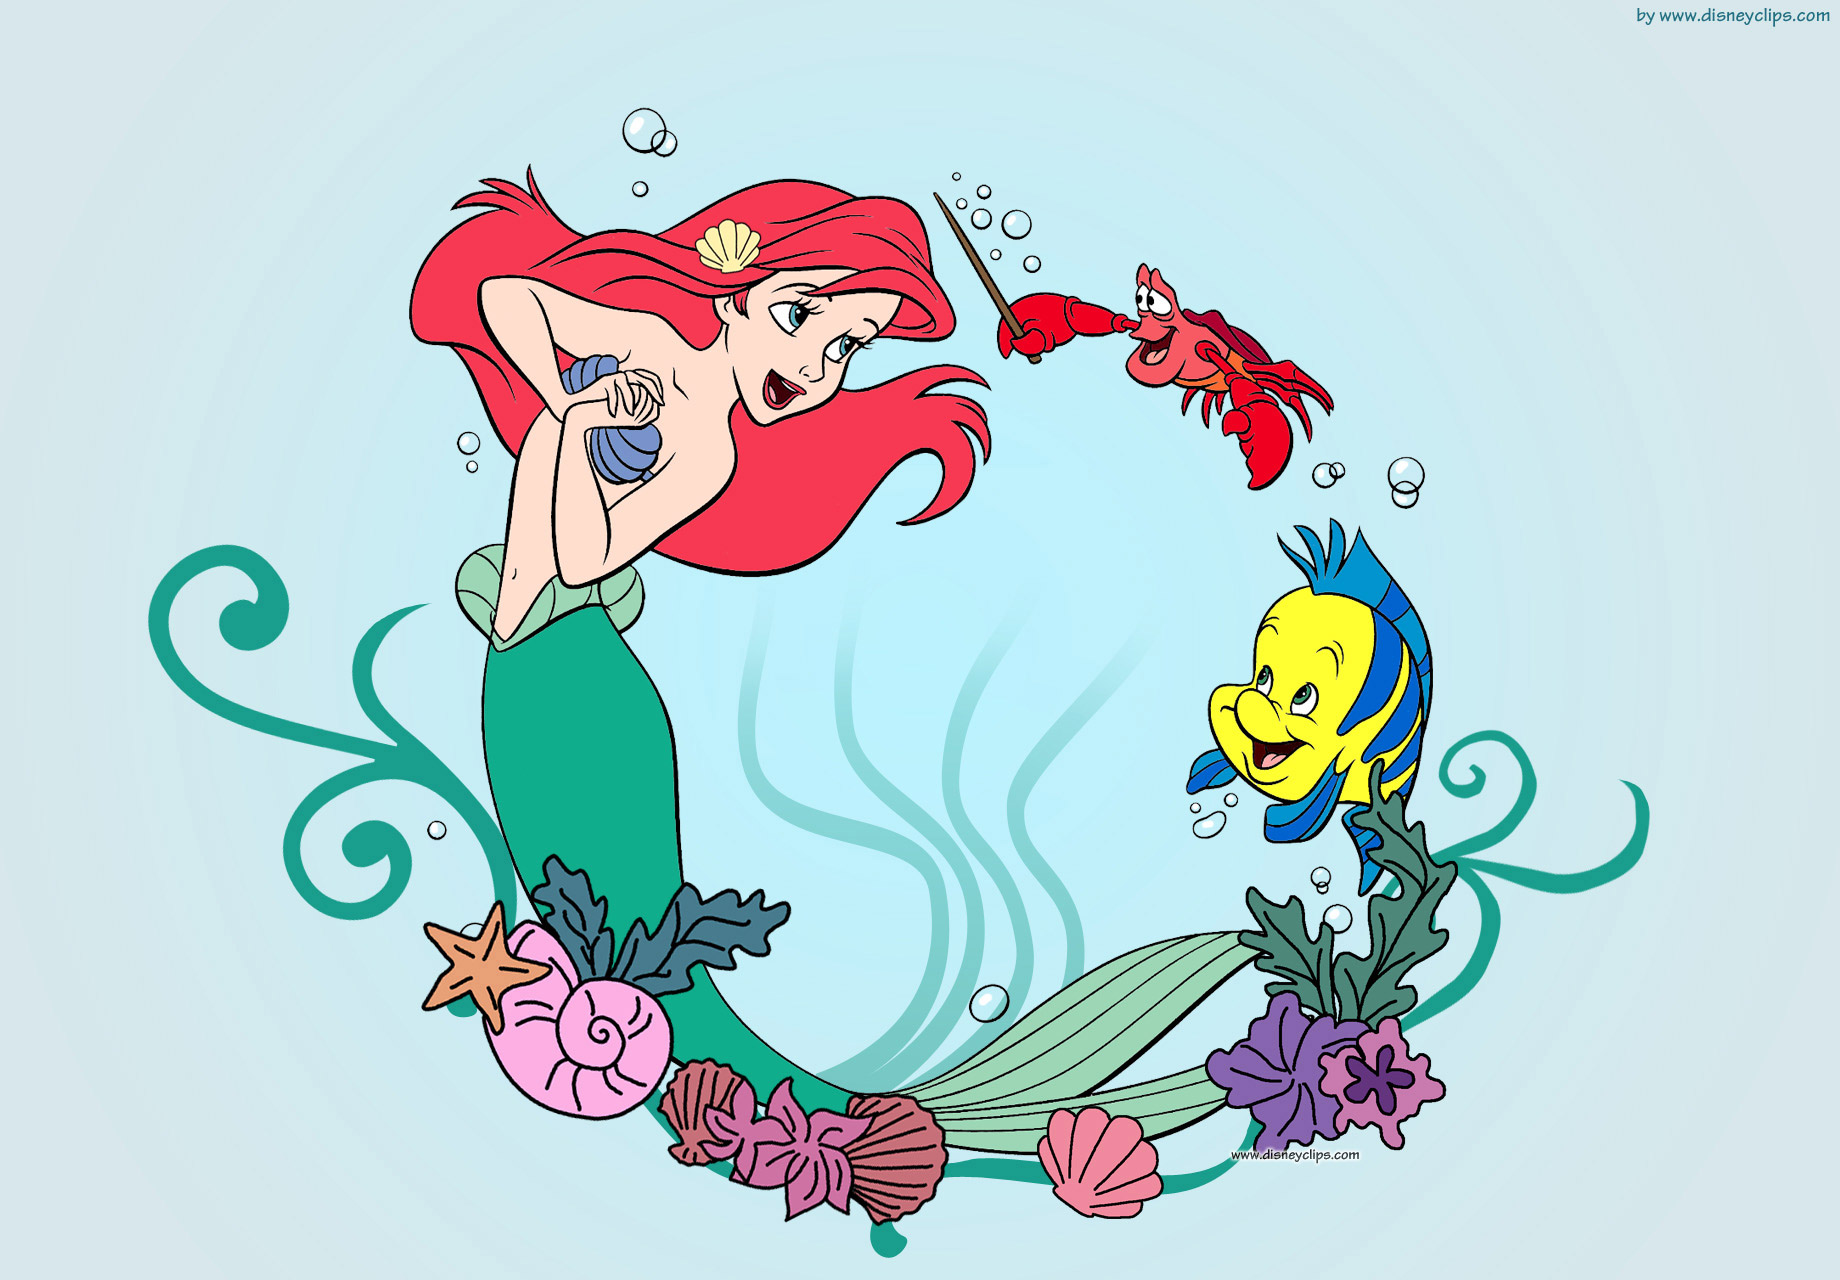 The Little Mermaid Wallpaper Disneyclips Com